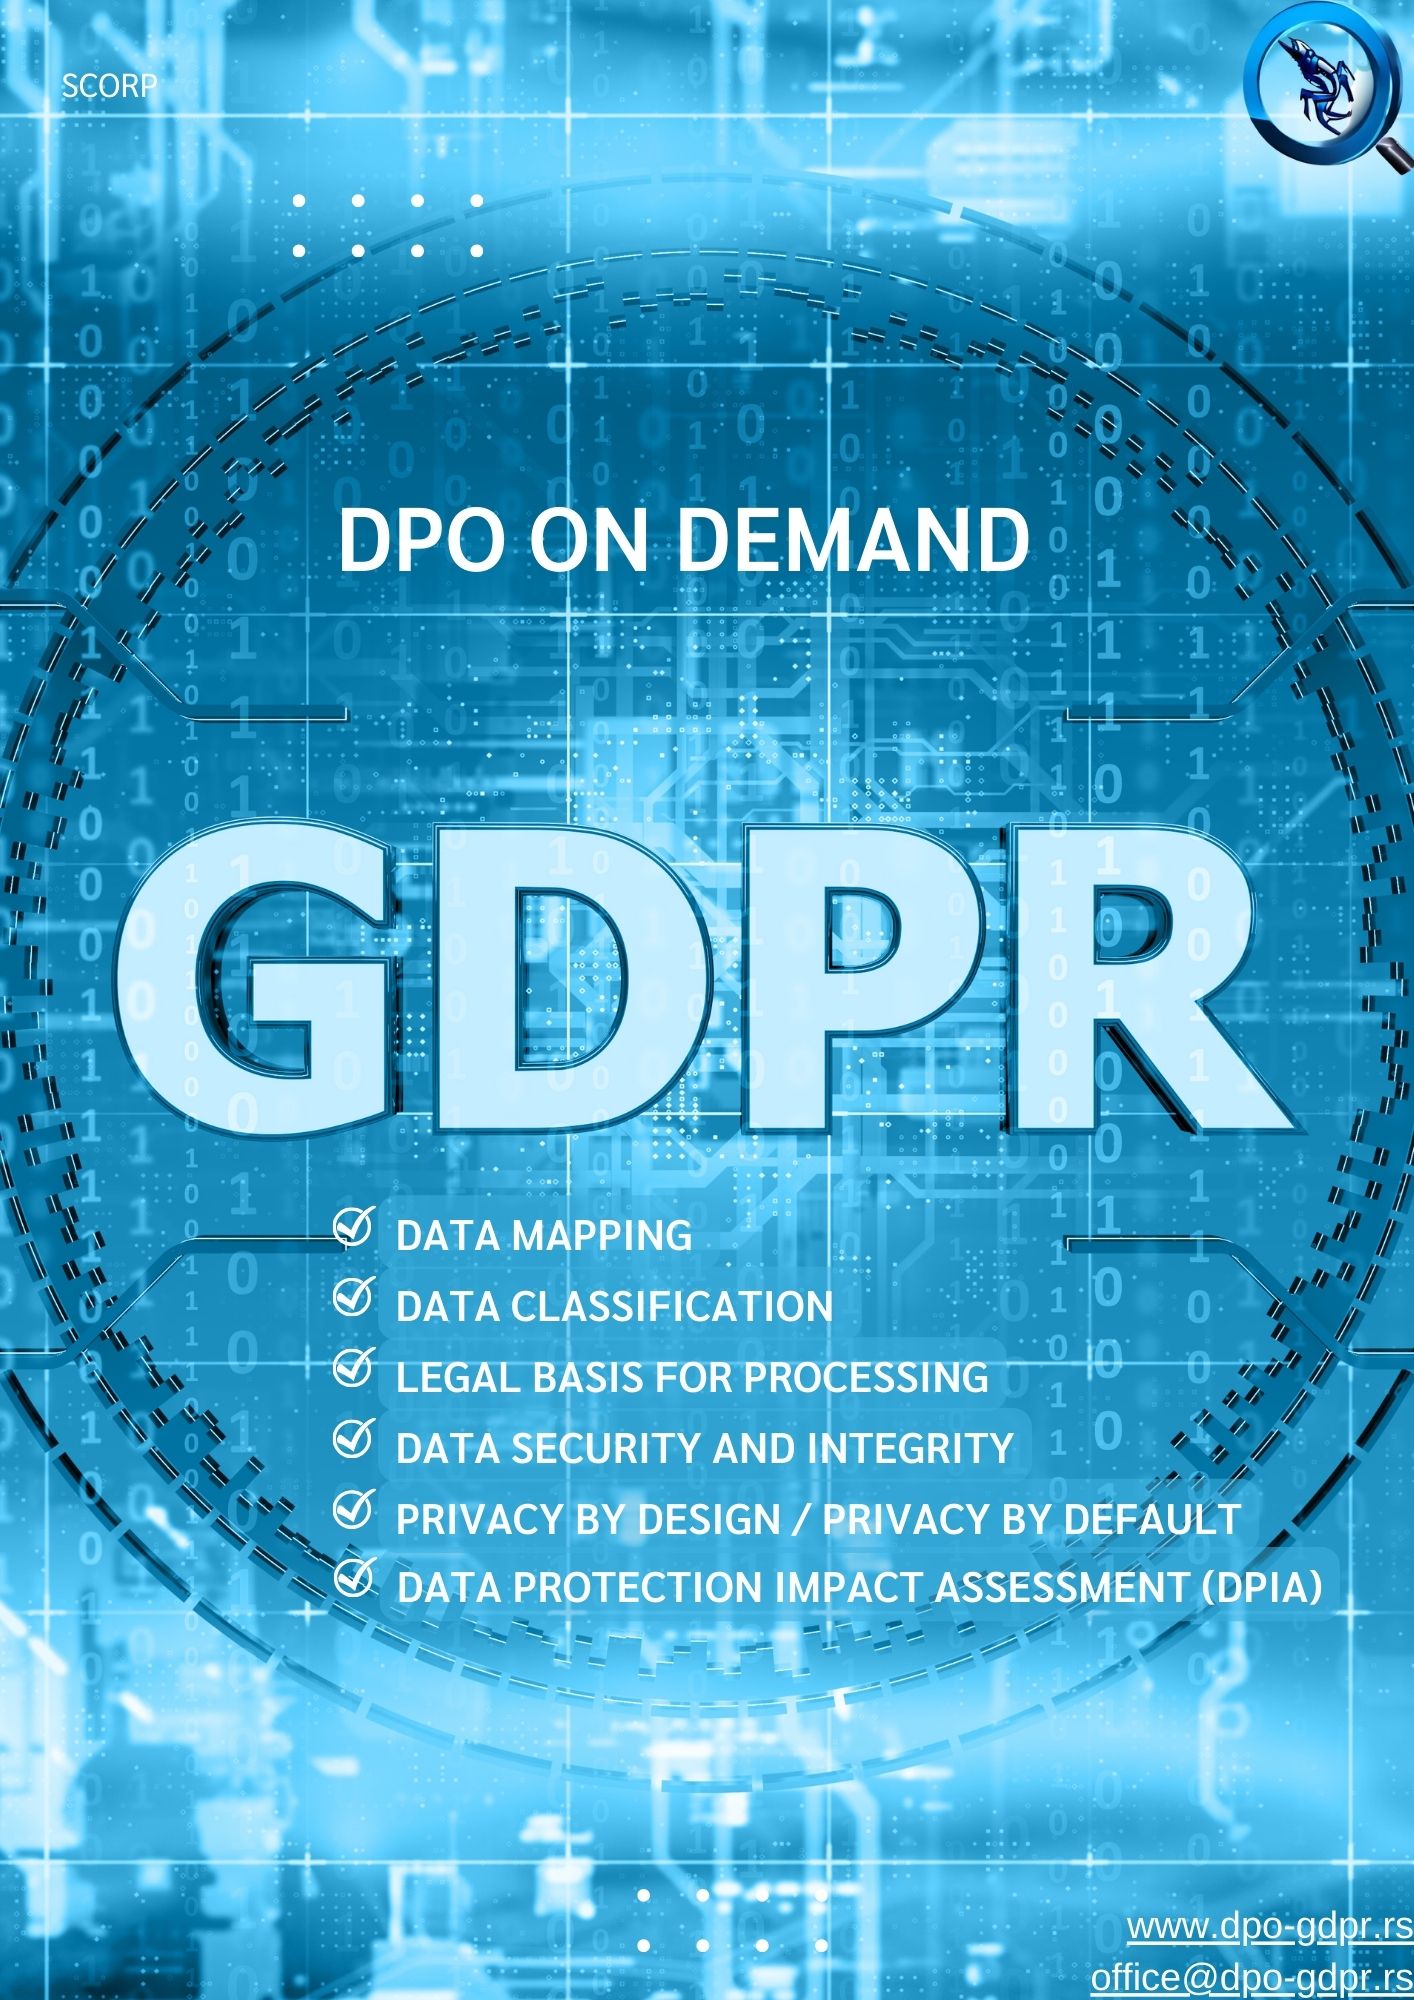 GDPR Support / DPO on Demand